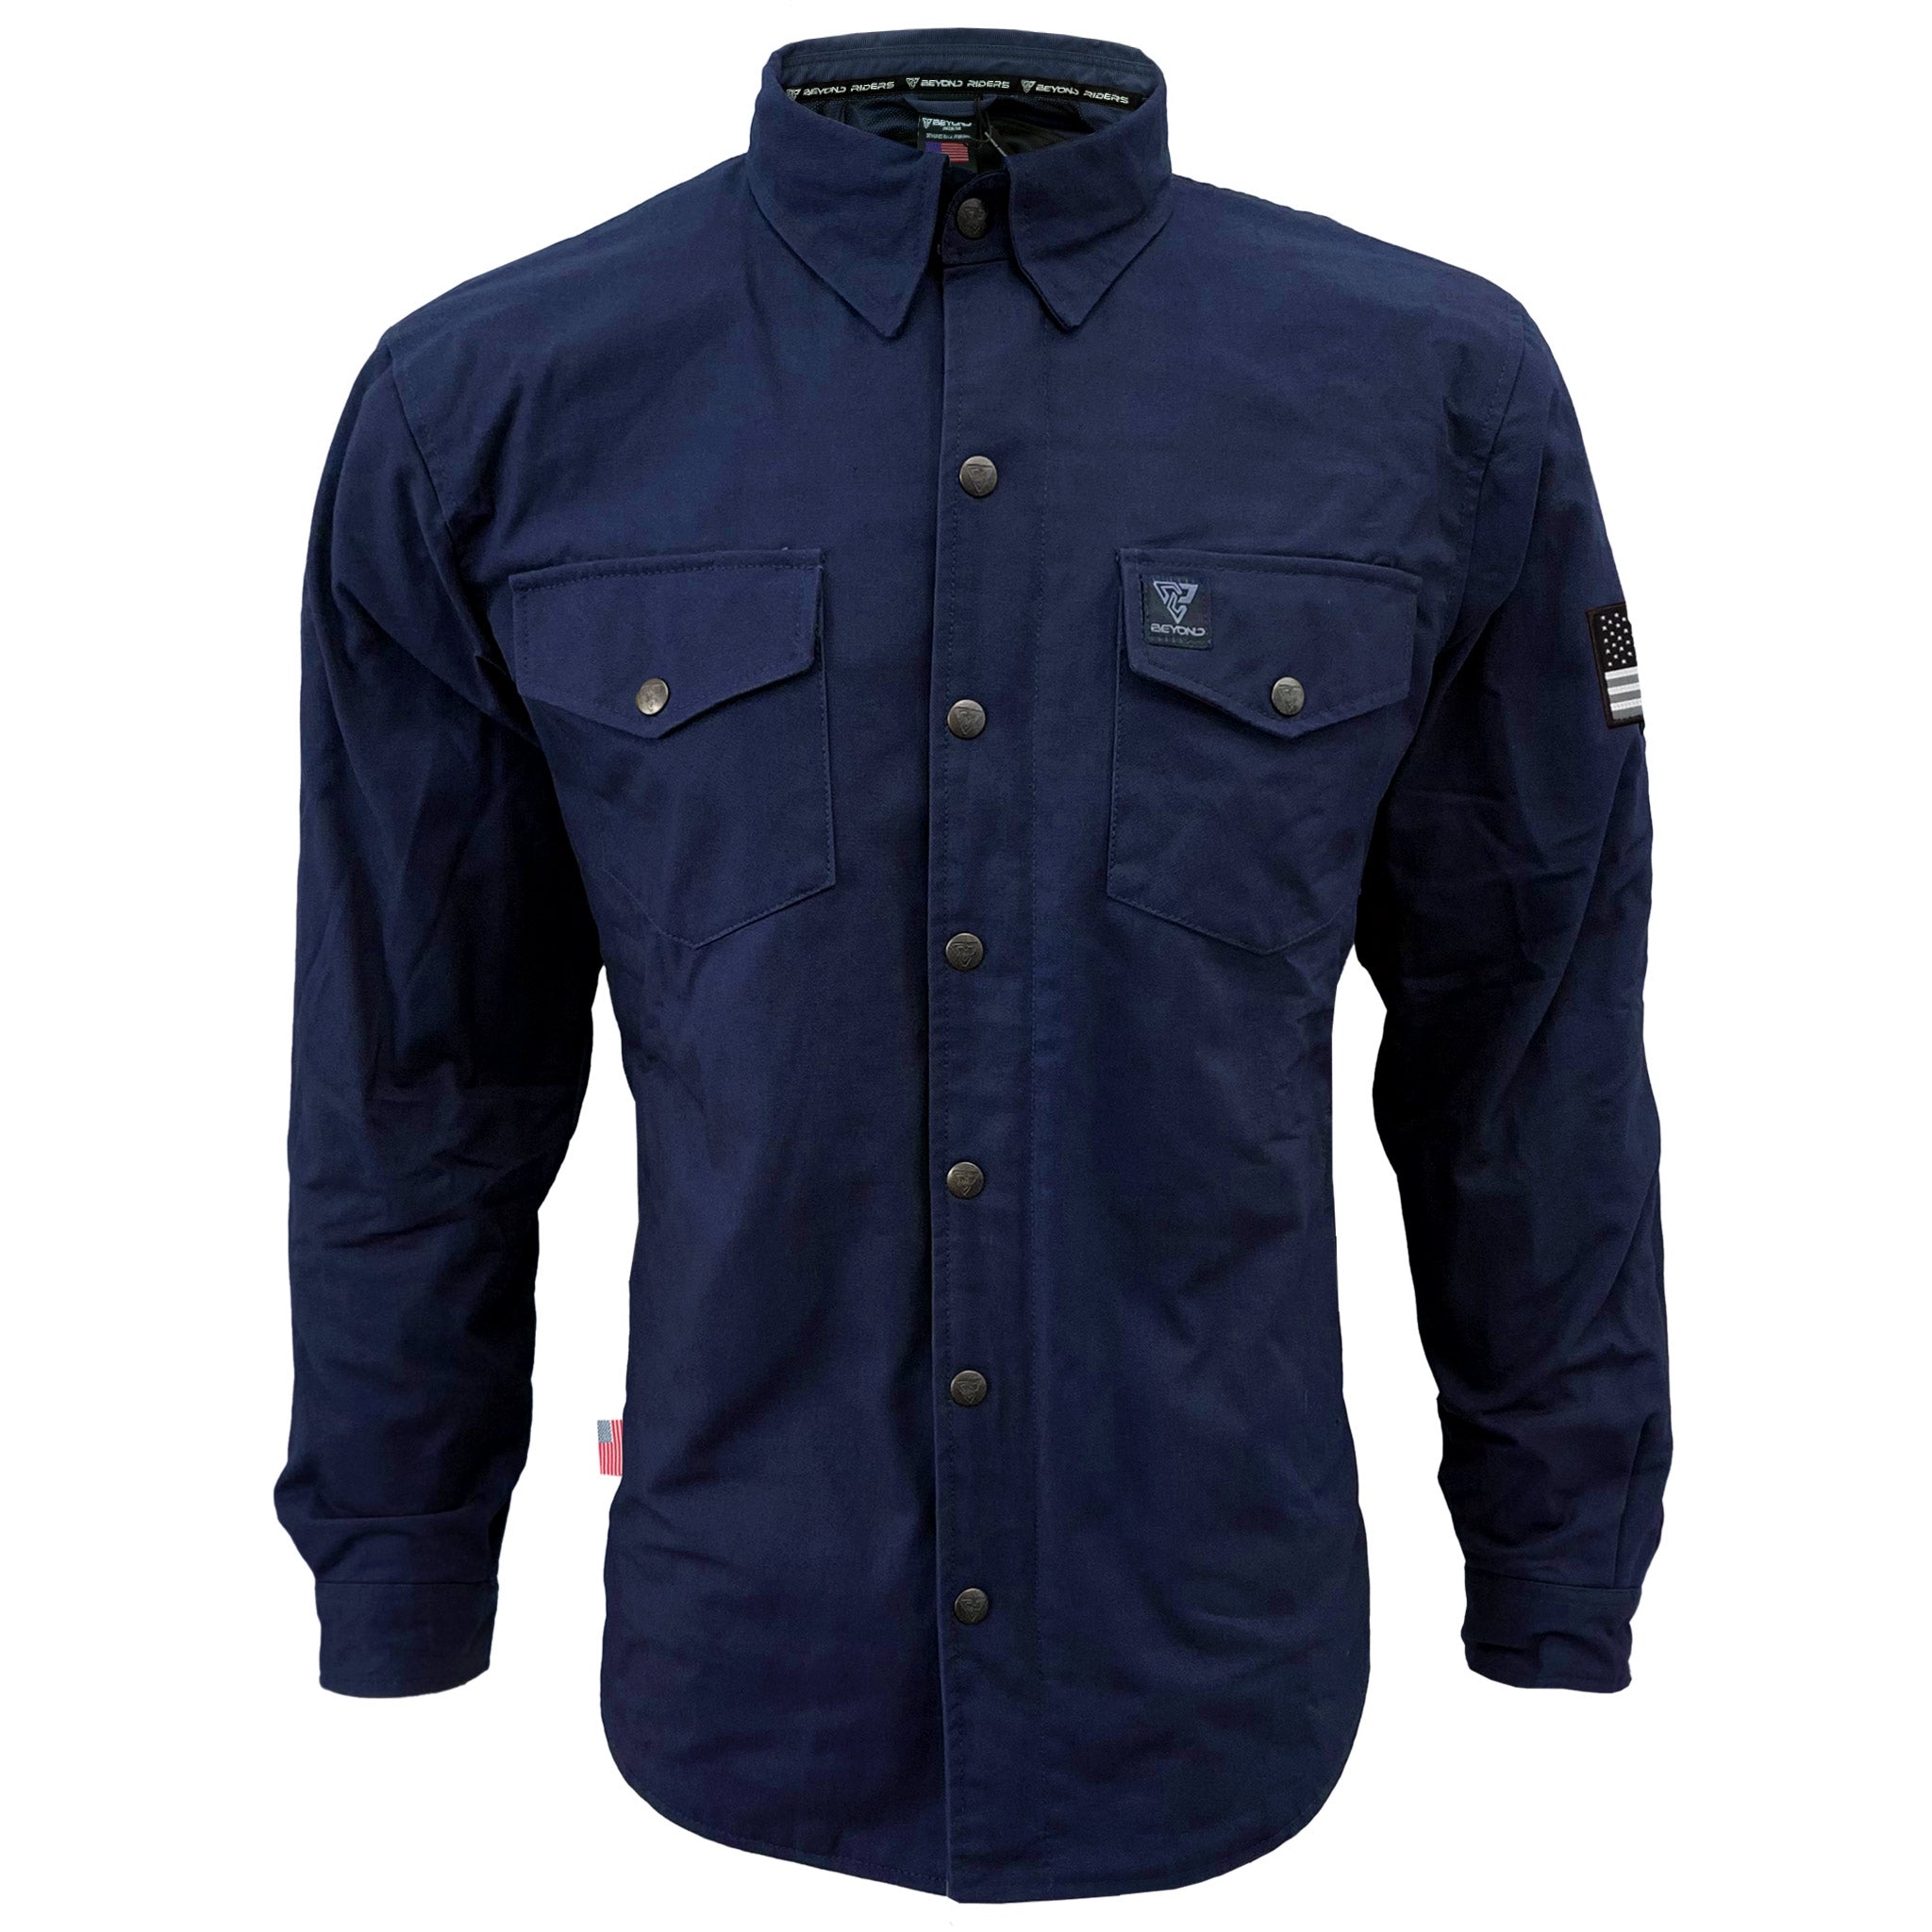 Men's-Canvas-Navy-Blue-Solid-Jacket-Front